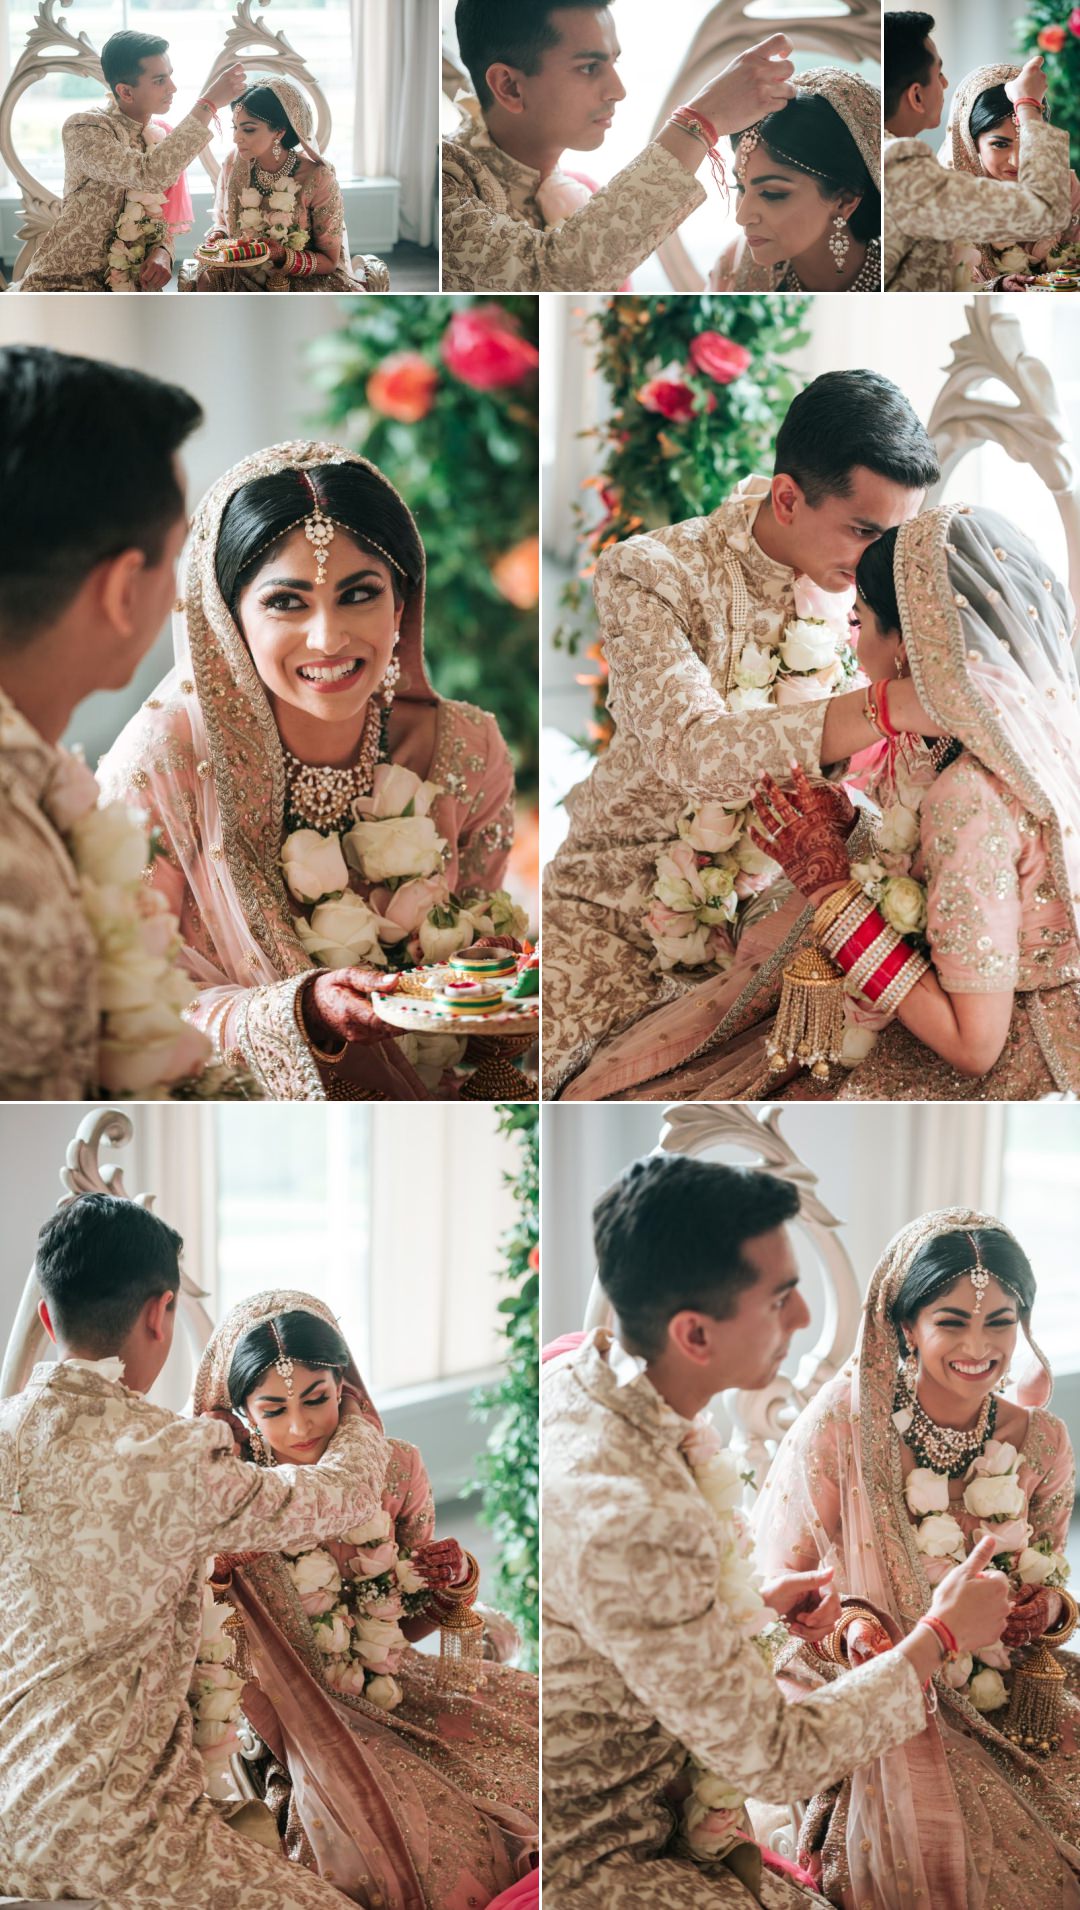 Pin by 𝐑𝐎𝐒𝐄 on Desi. | Couple wedding dress, Wedding photoshoot poses,  Bridal photography poses